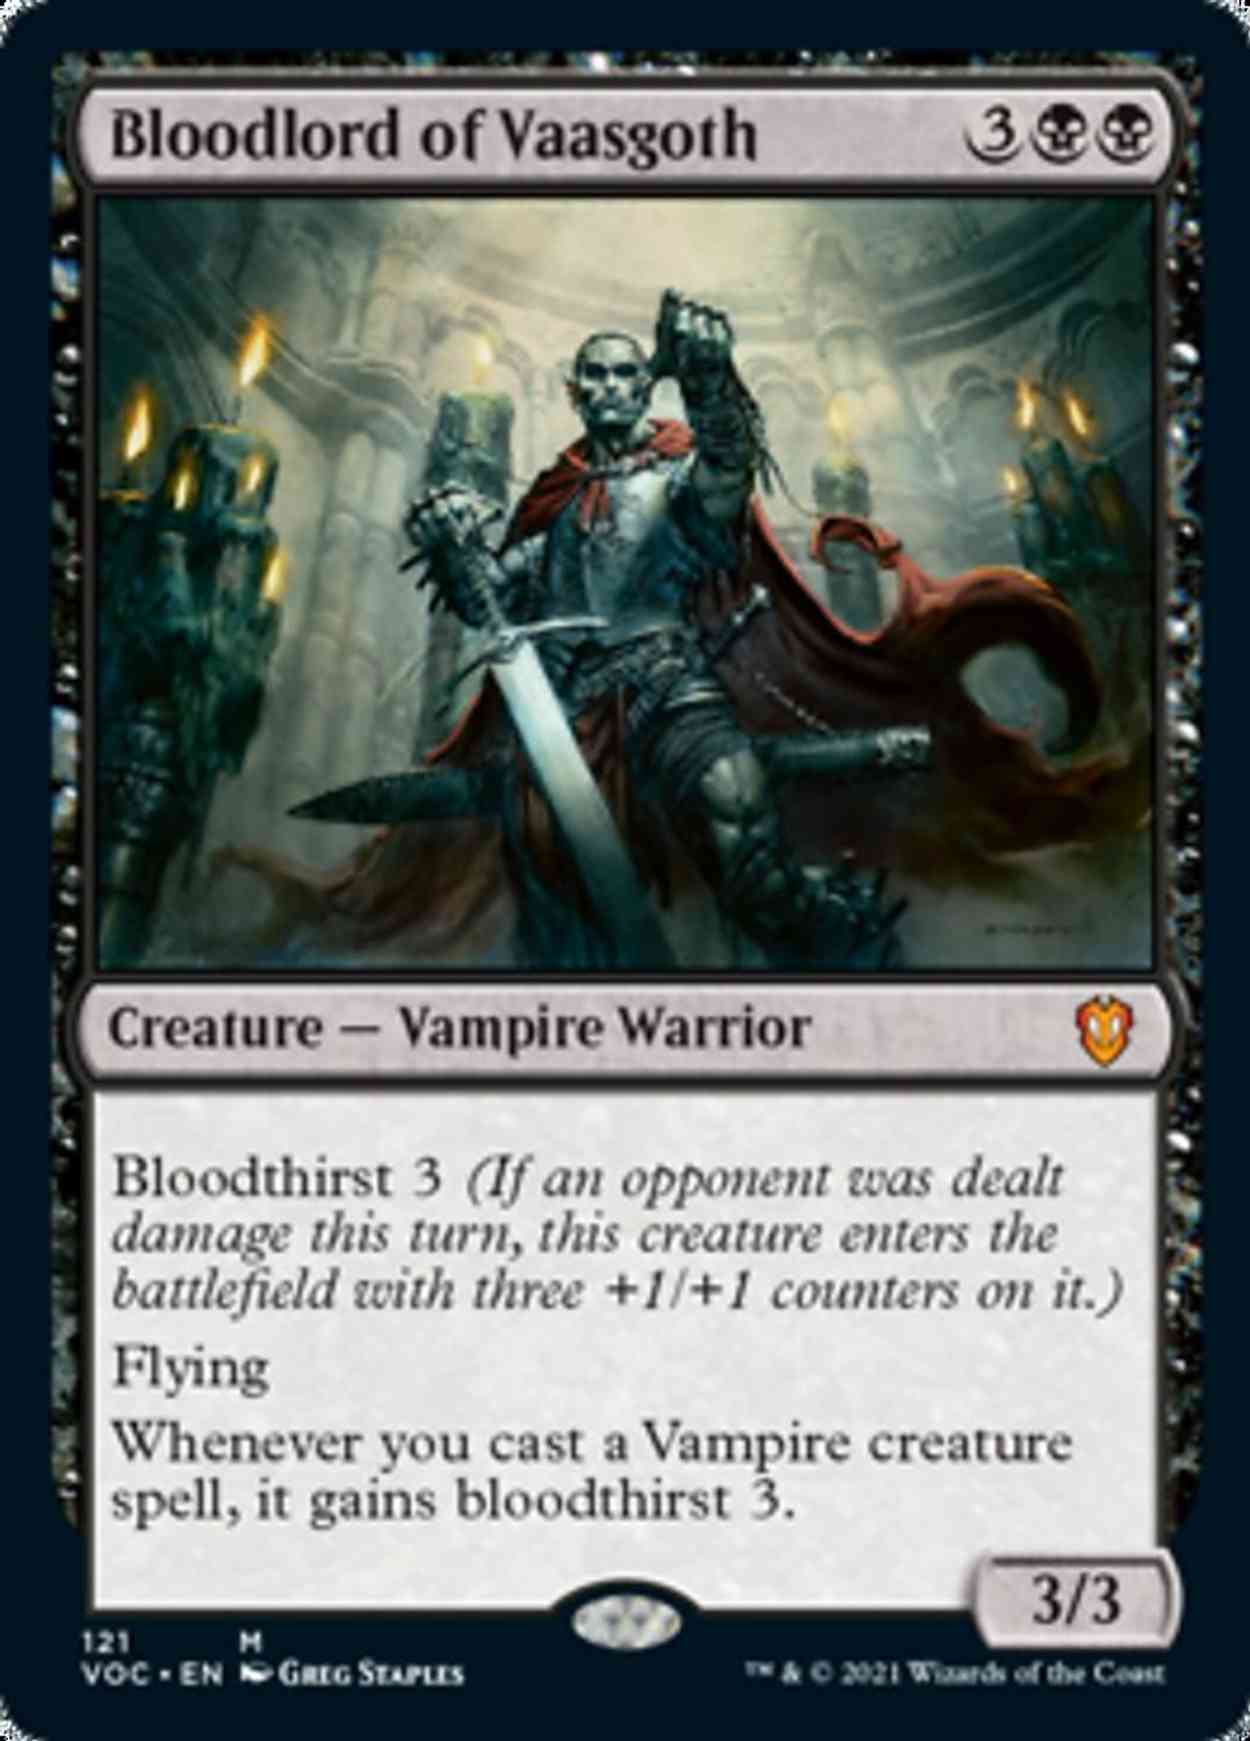 Bloodlord of Vaasgoth magic card front